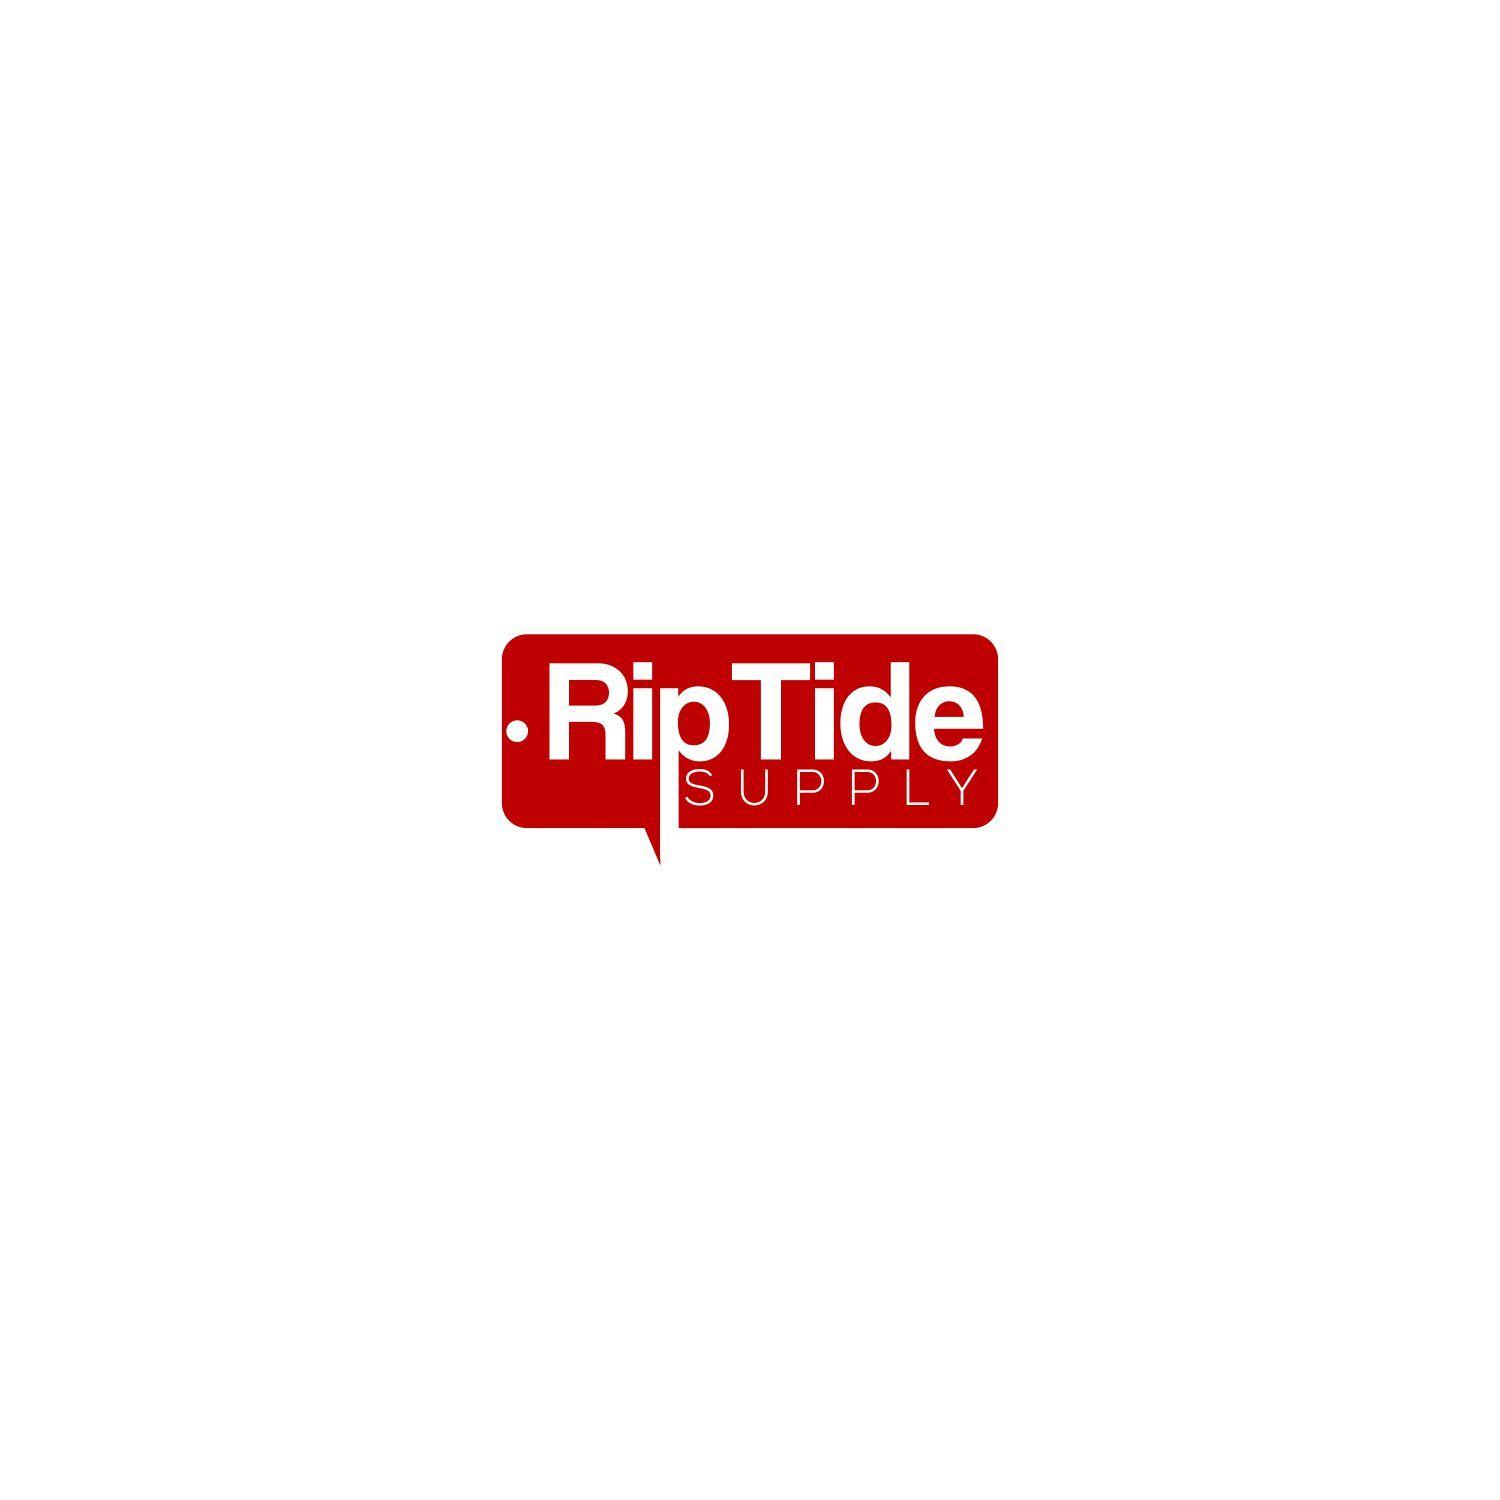 Riptide White Logo - Professional, Serious, Business Logo Design for RipTide Supply